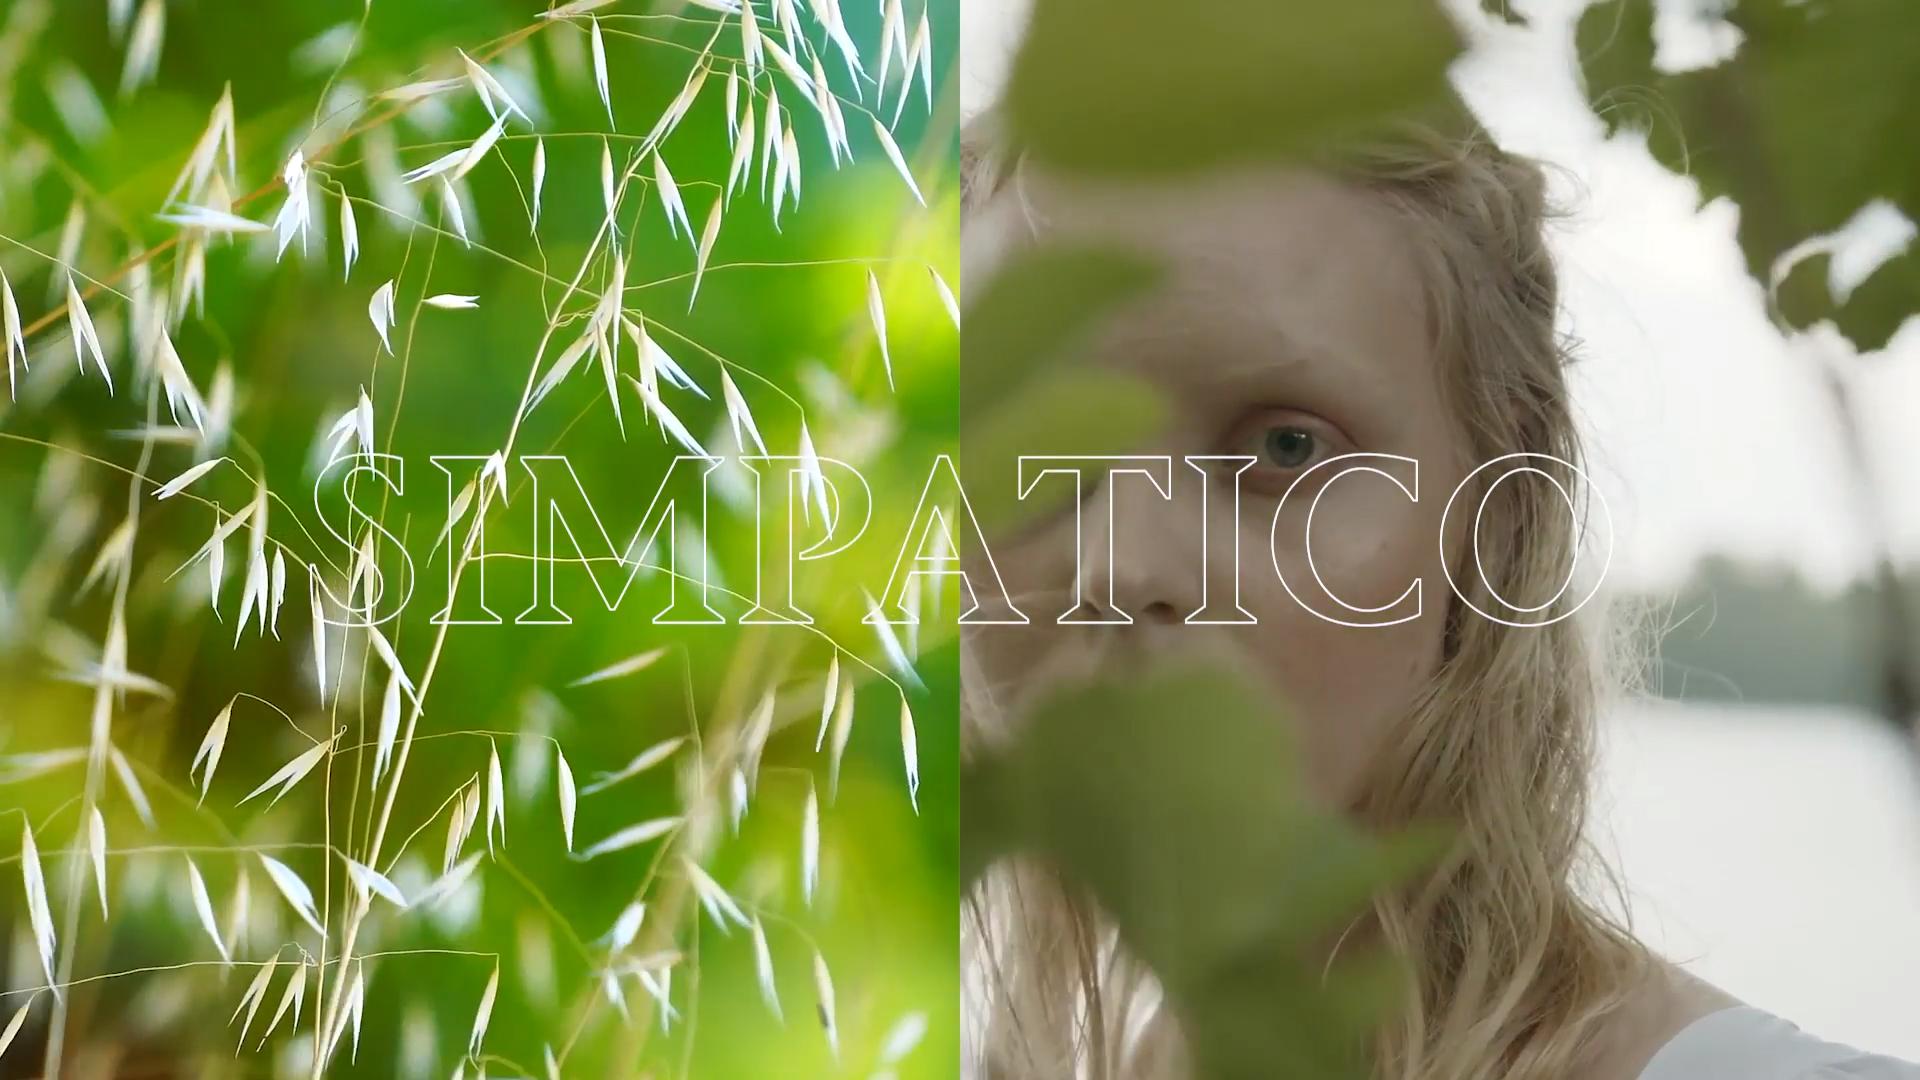 Kate Miller-Heidke - Simpatico (Lyric Video)